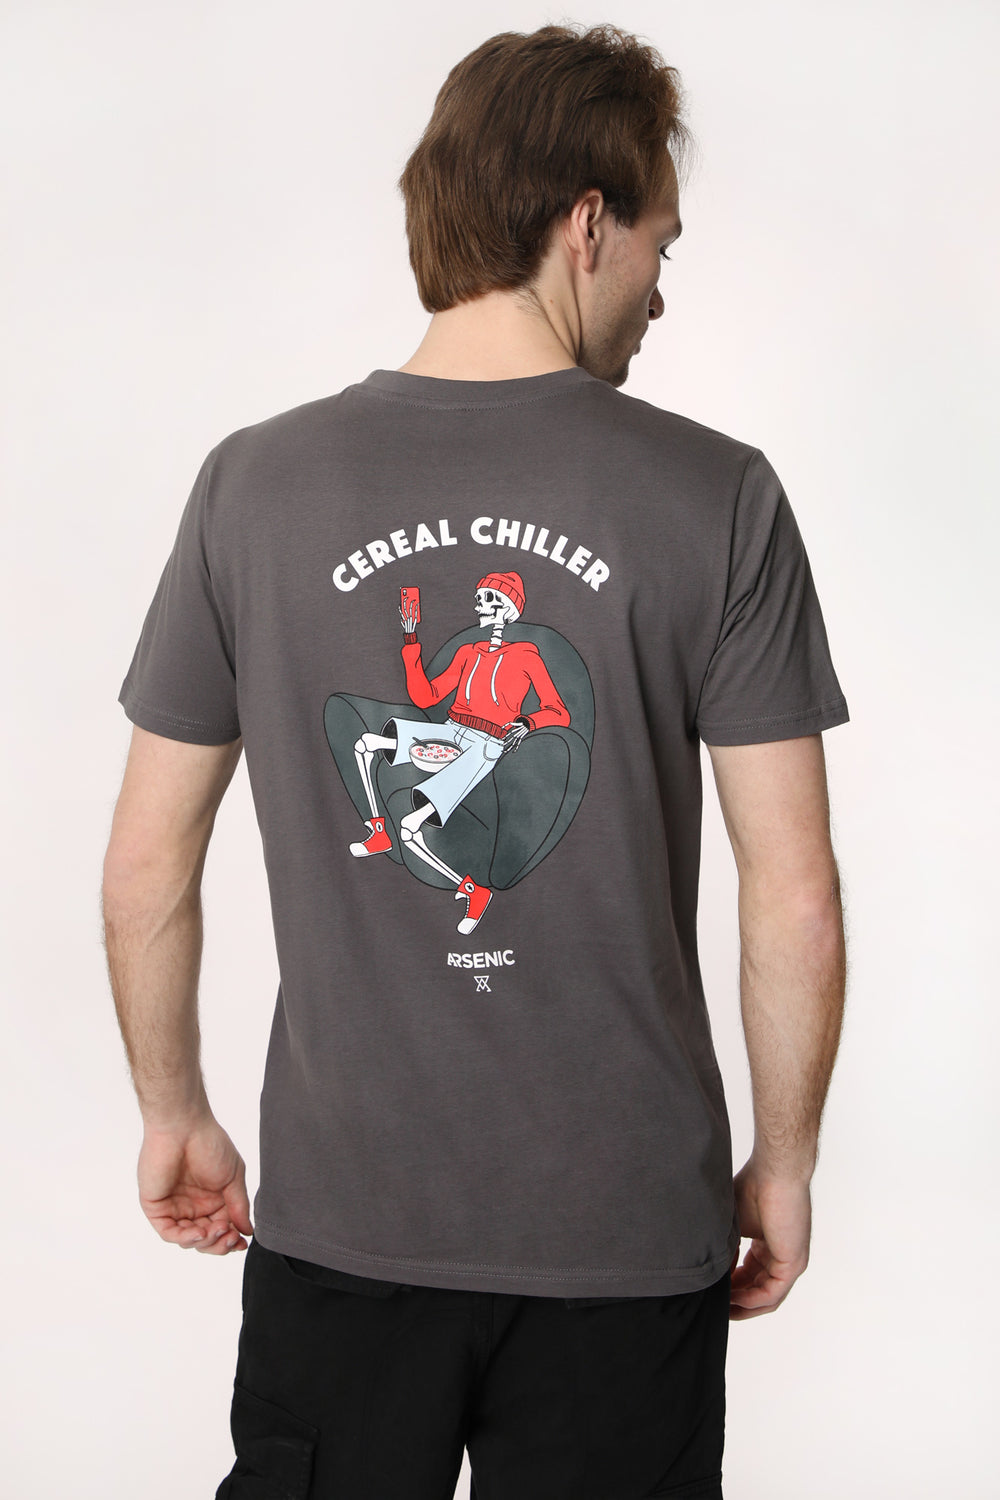 T-Shirt Imprimé Cereal Chiller Arsenic Homme T-Shirt Imprimé Cereal Chiller Arsenic Homme